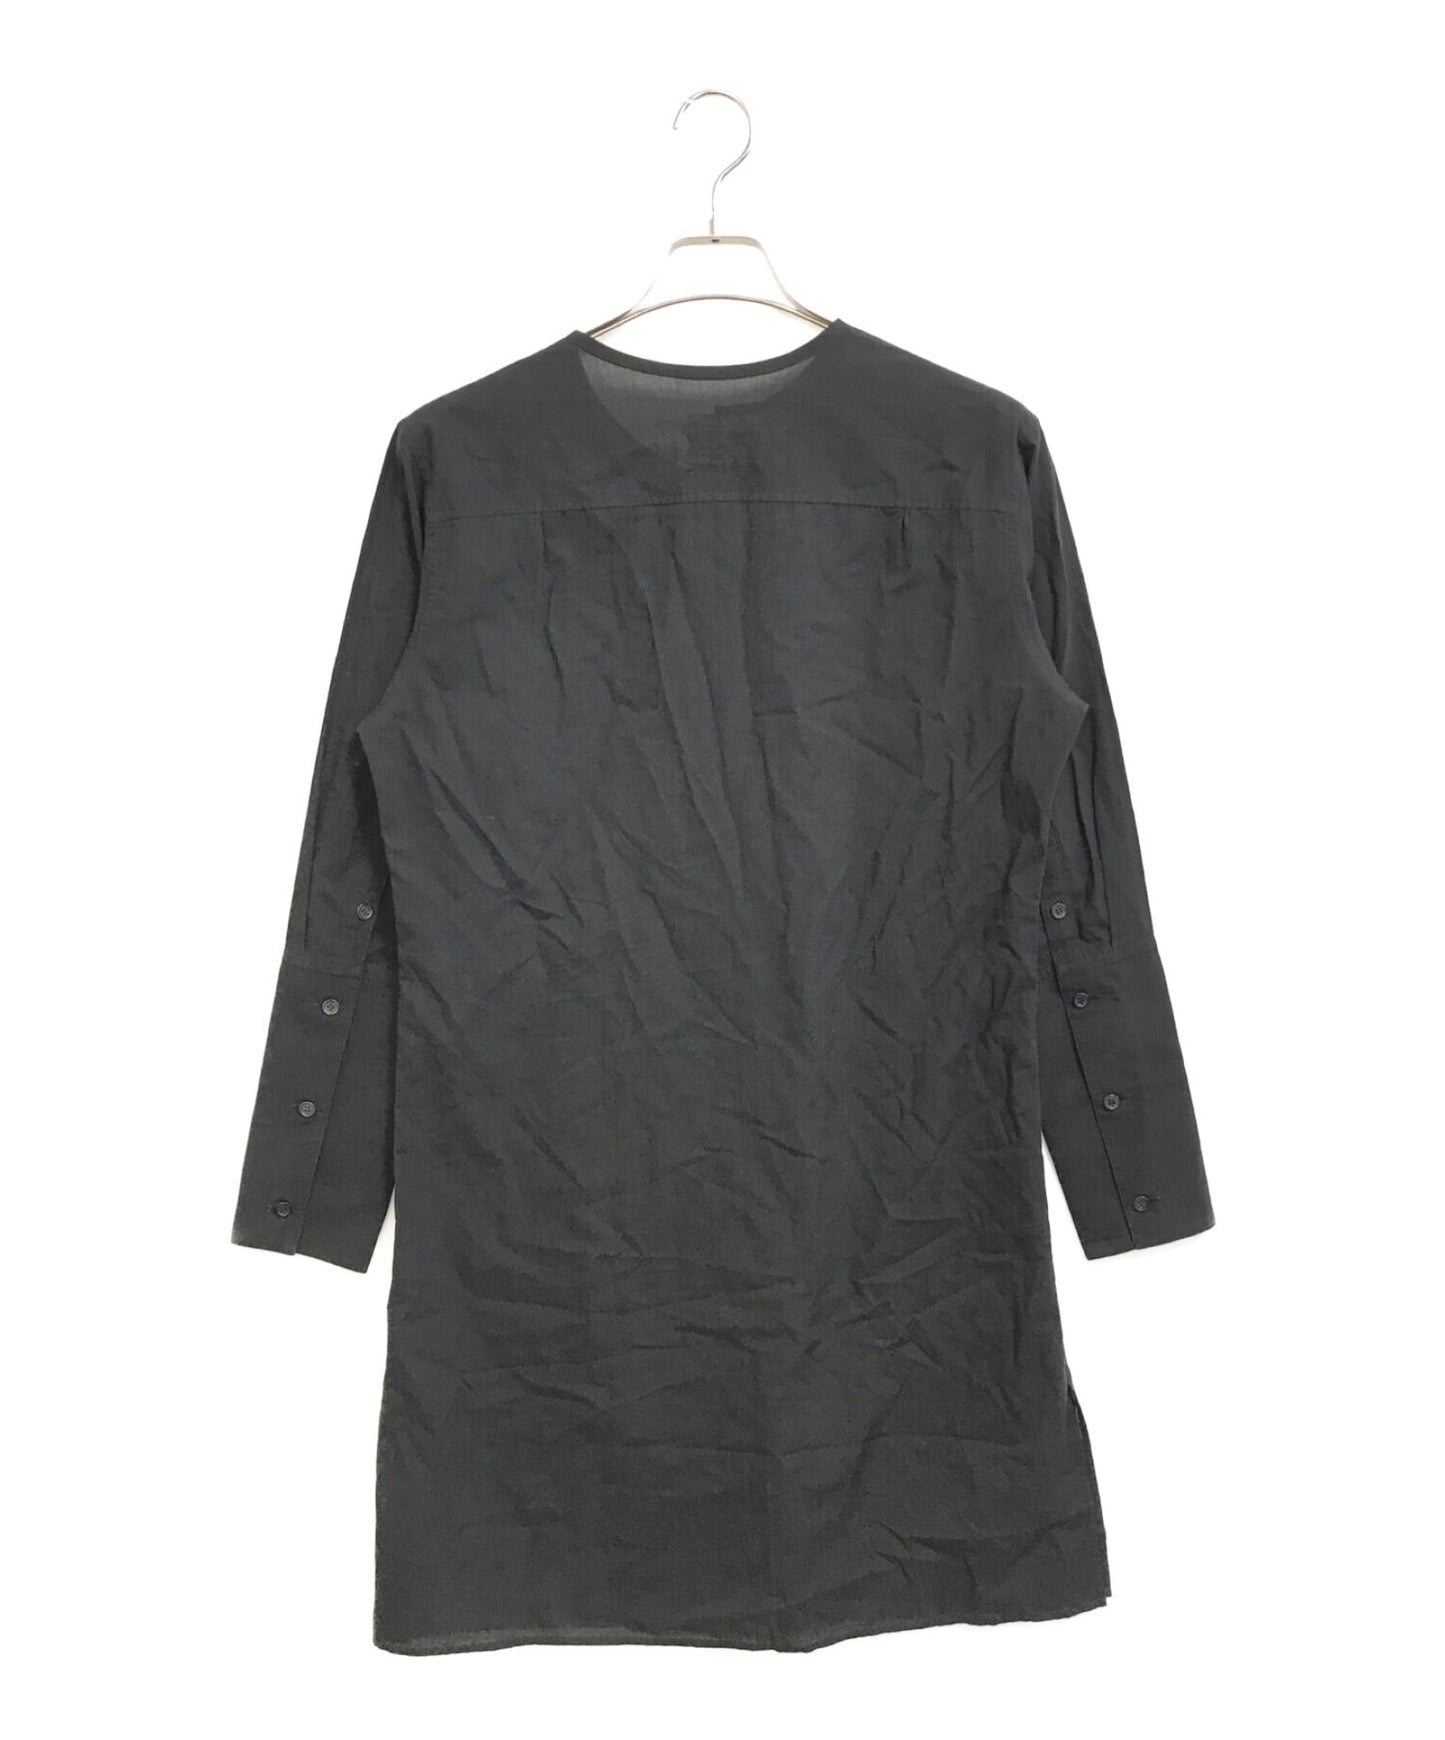 B Yohji Yamamoto 120/2孤獨，無頸袖襯衫